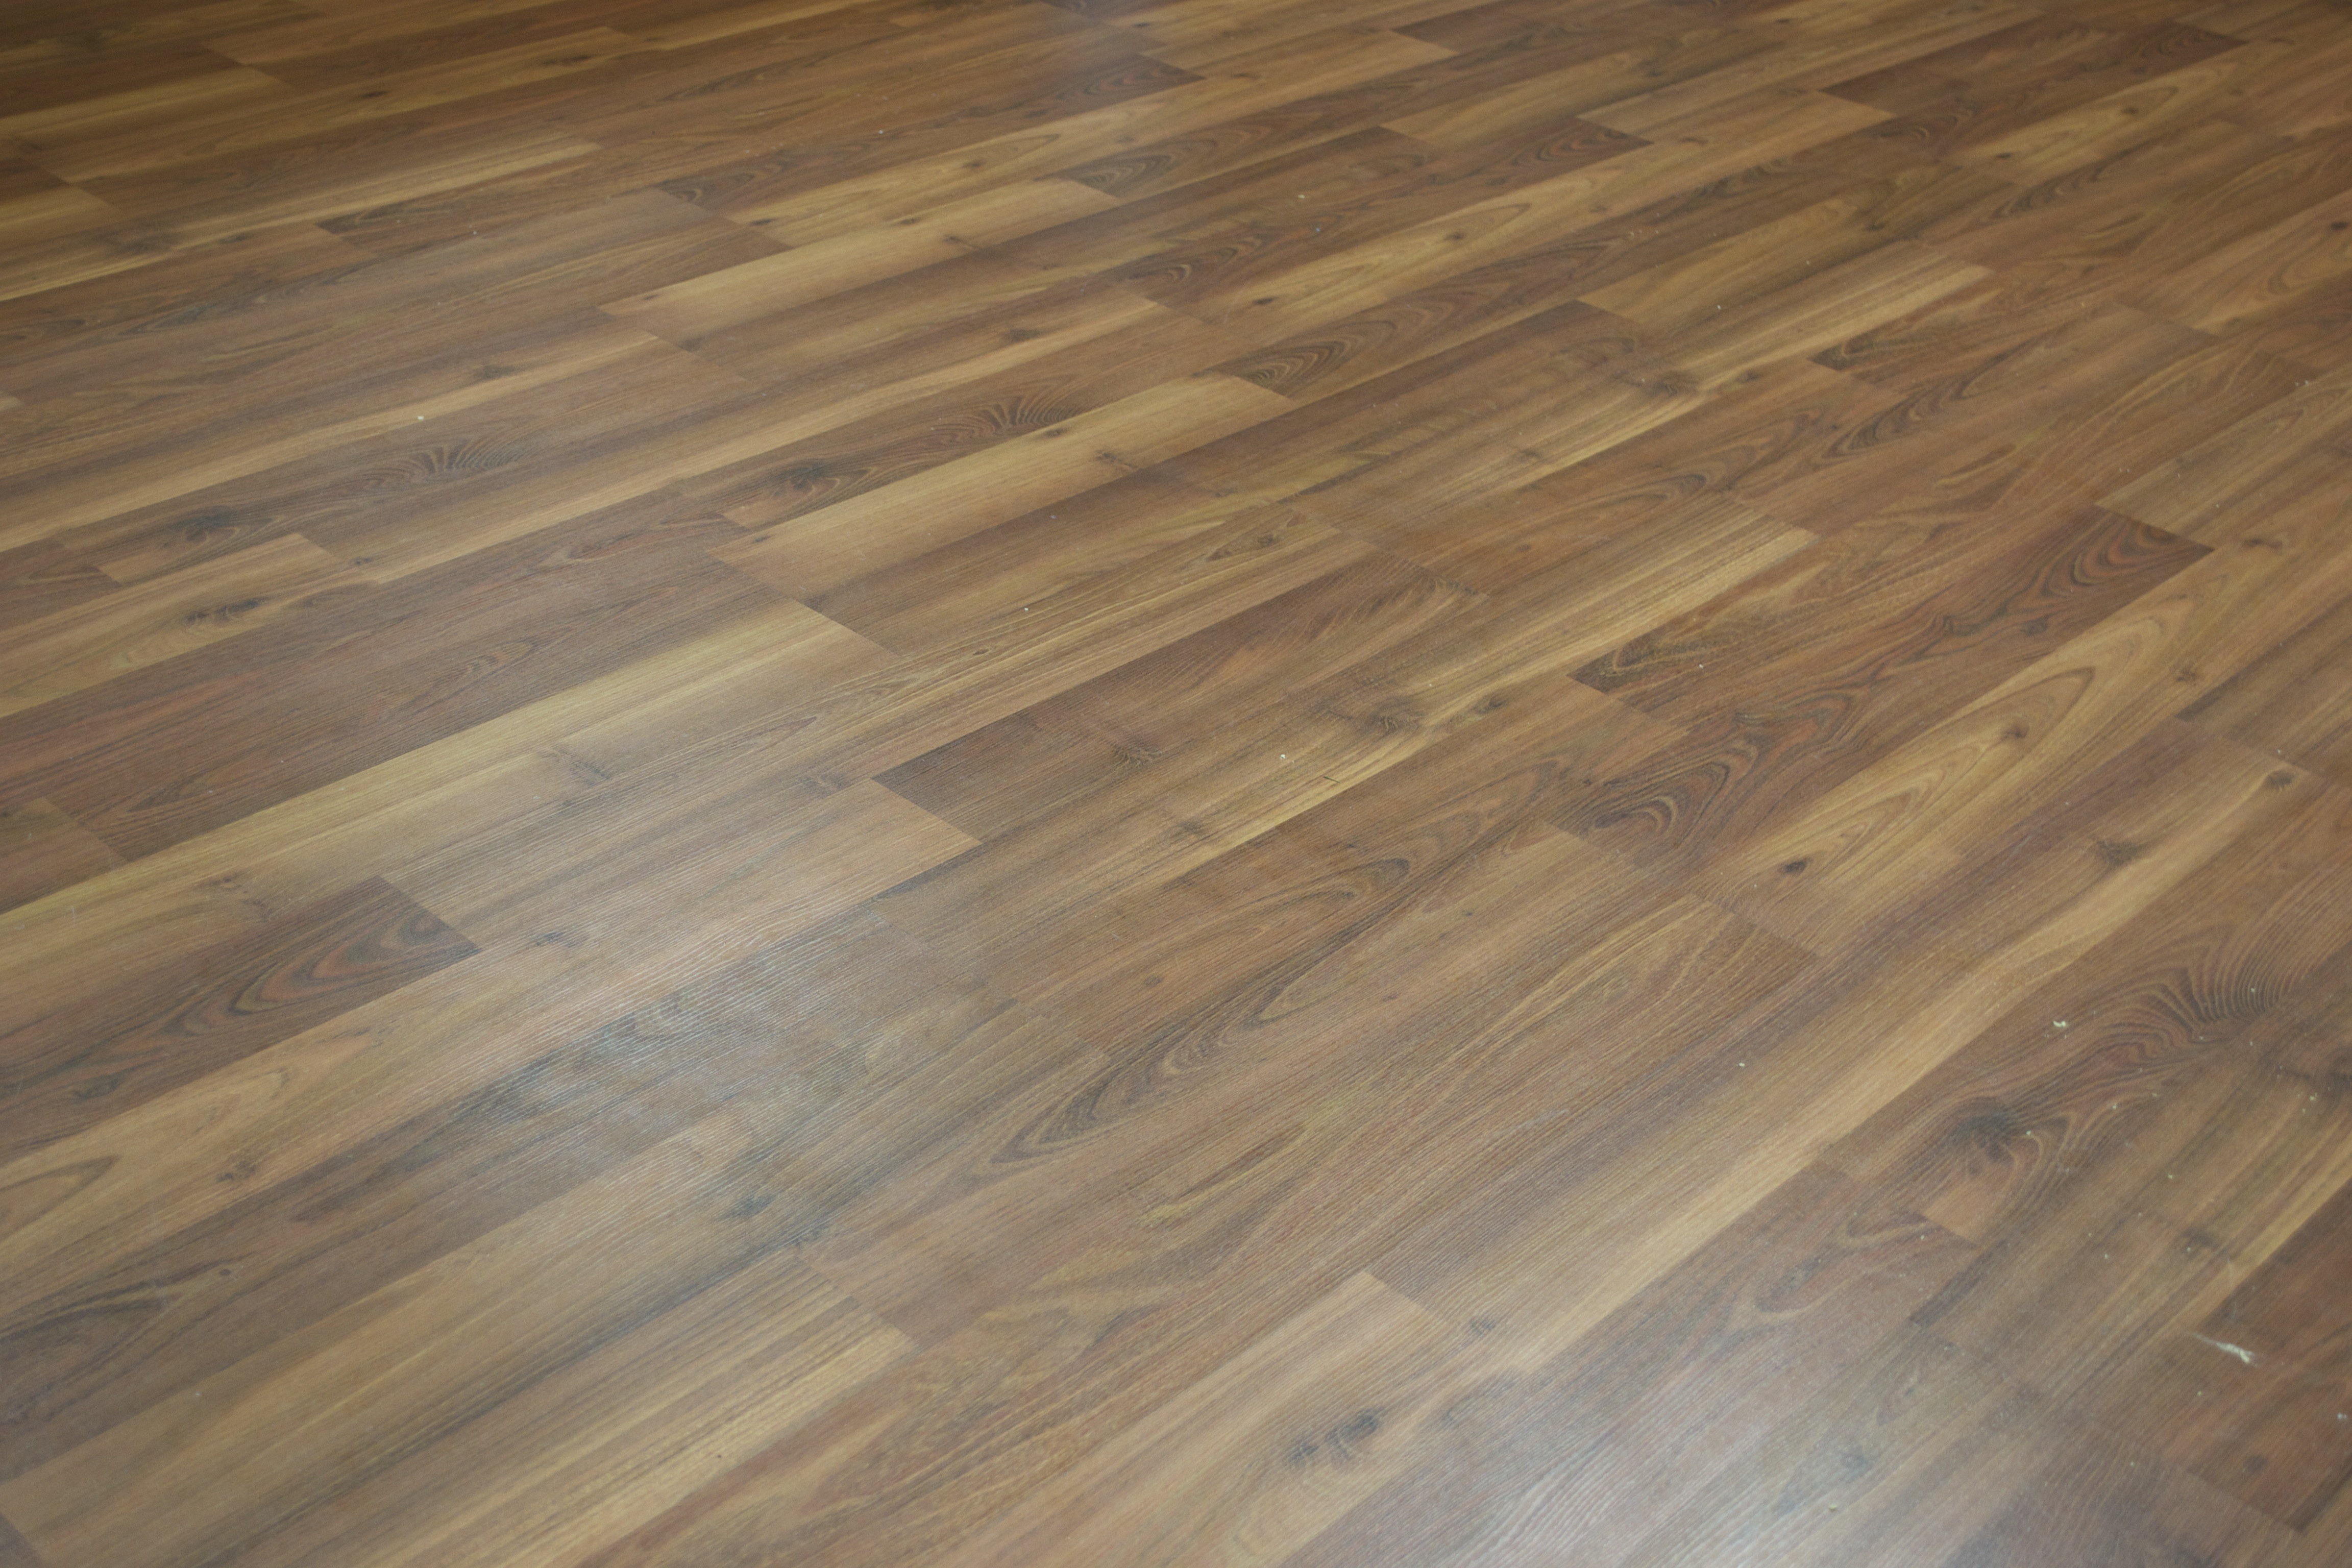 Wood floor 1 photo